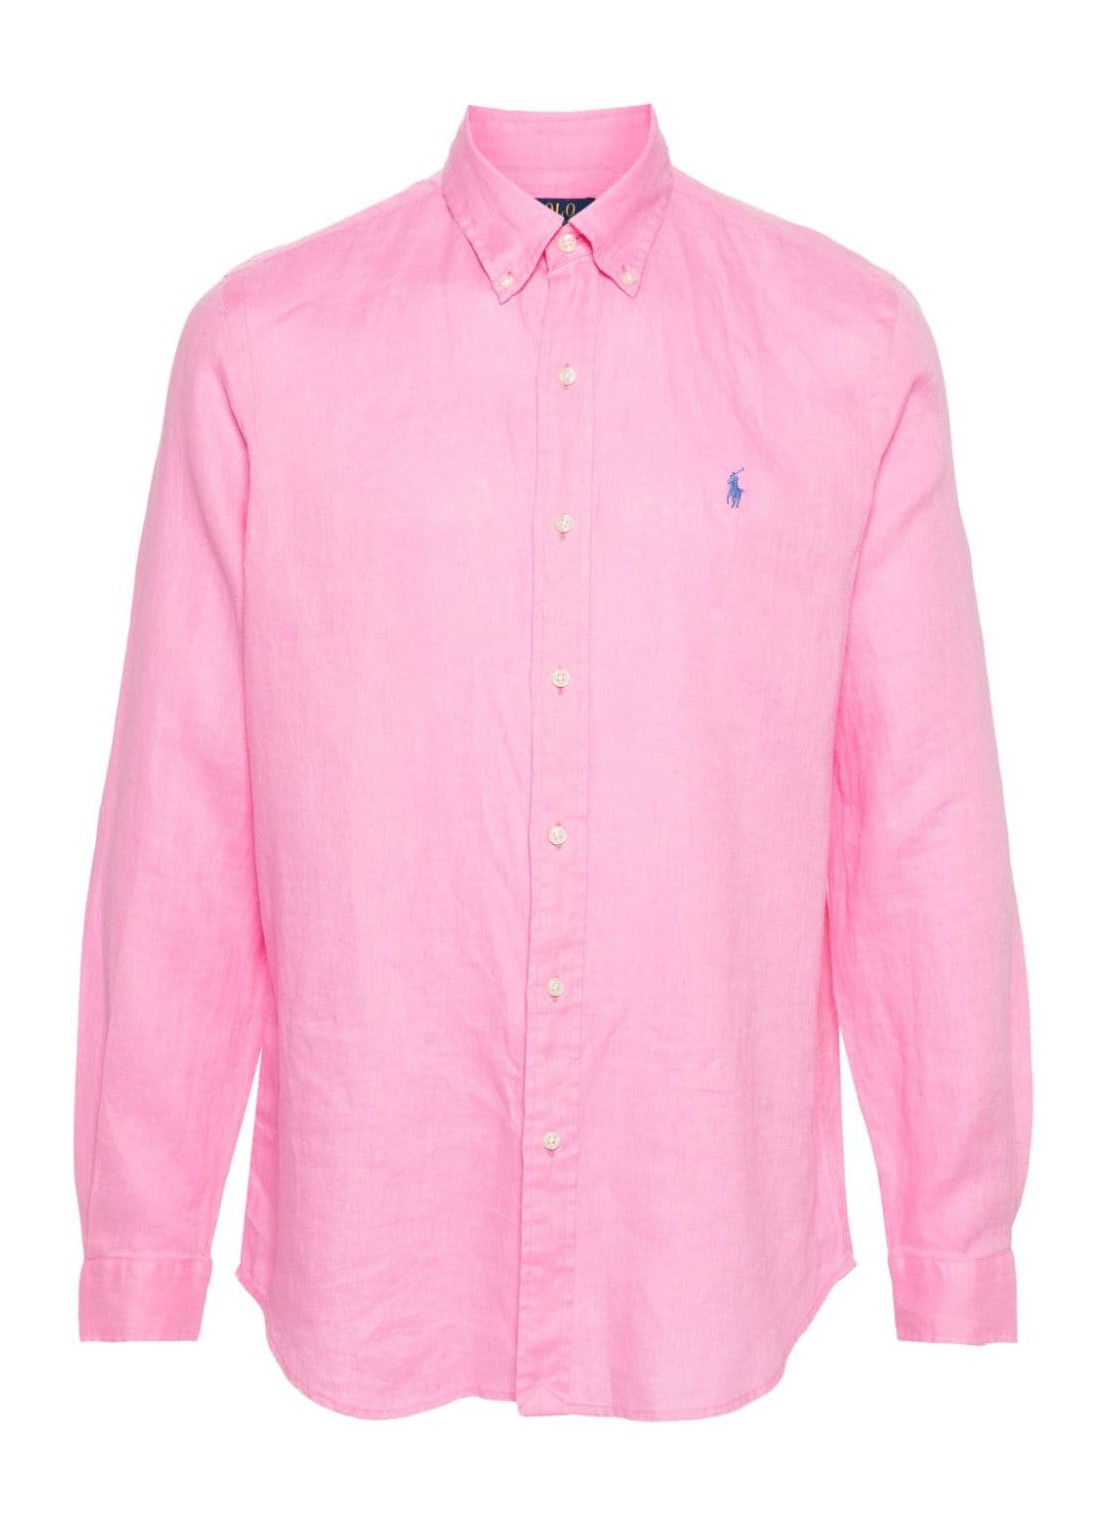 Camiseria polo ralph lauren shirt man cubdppcs-long sleeve-sport shirt 710794141022 harbor pink tall